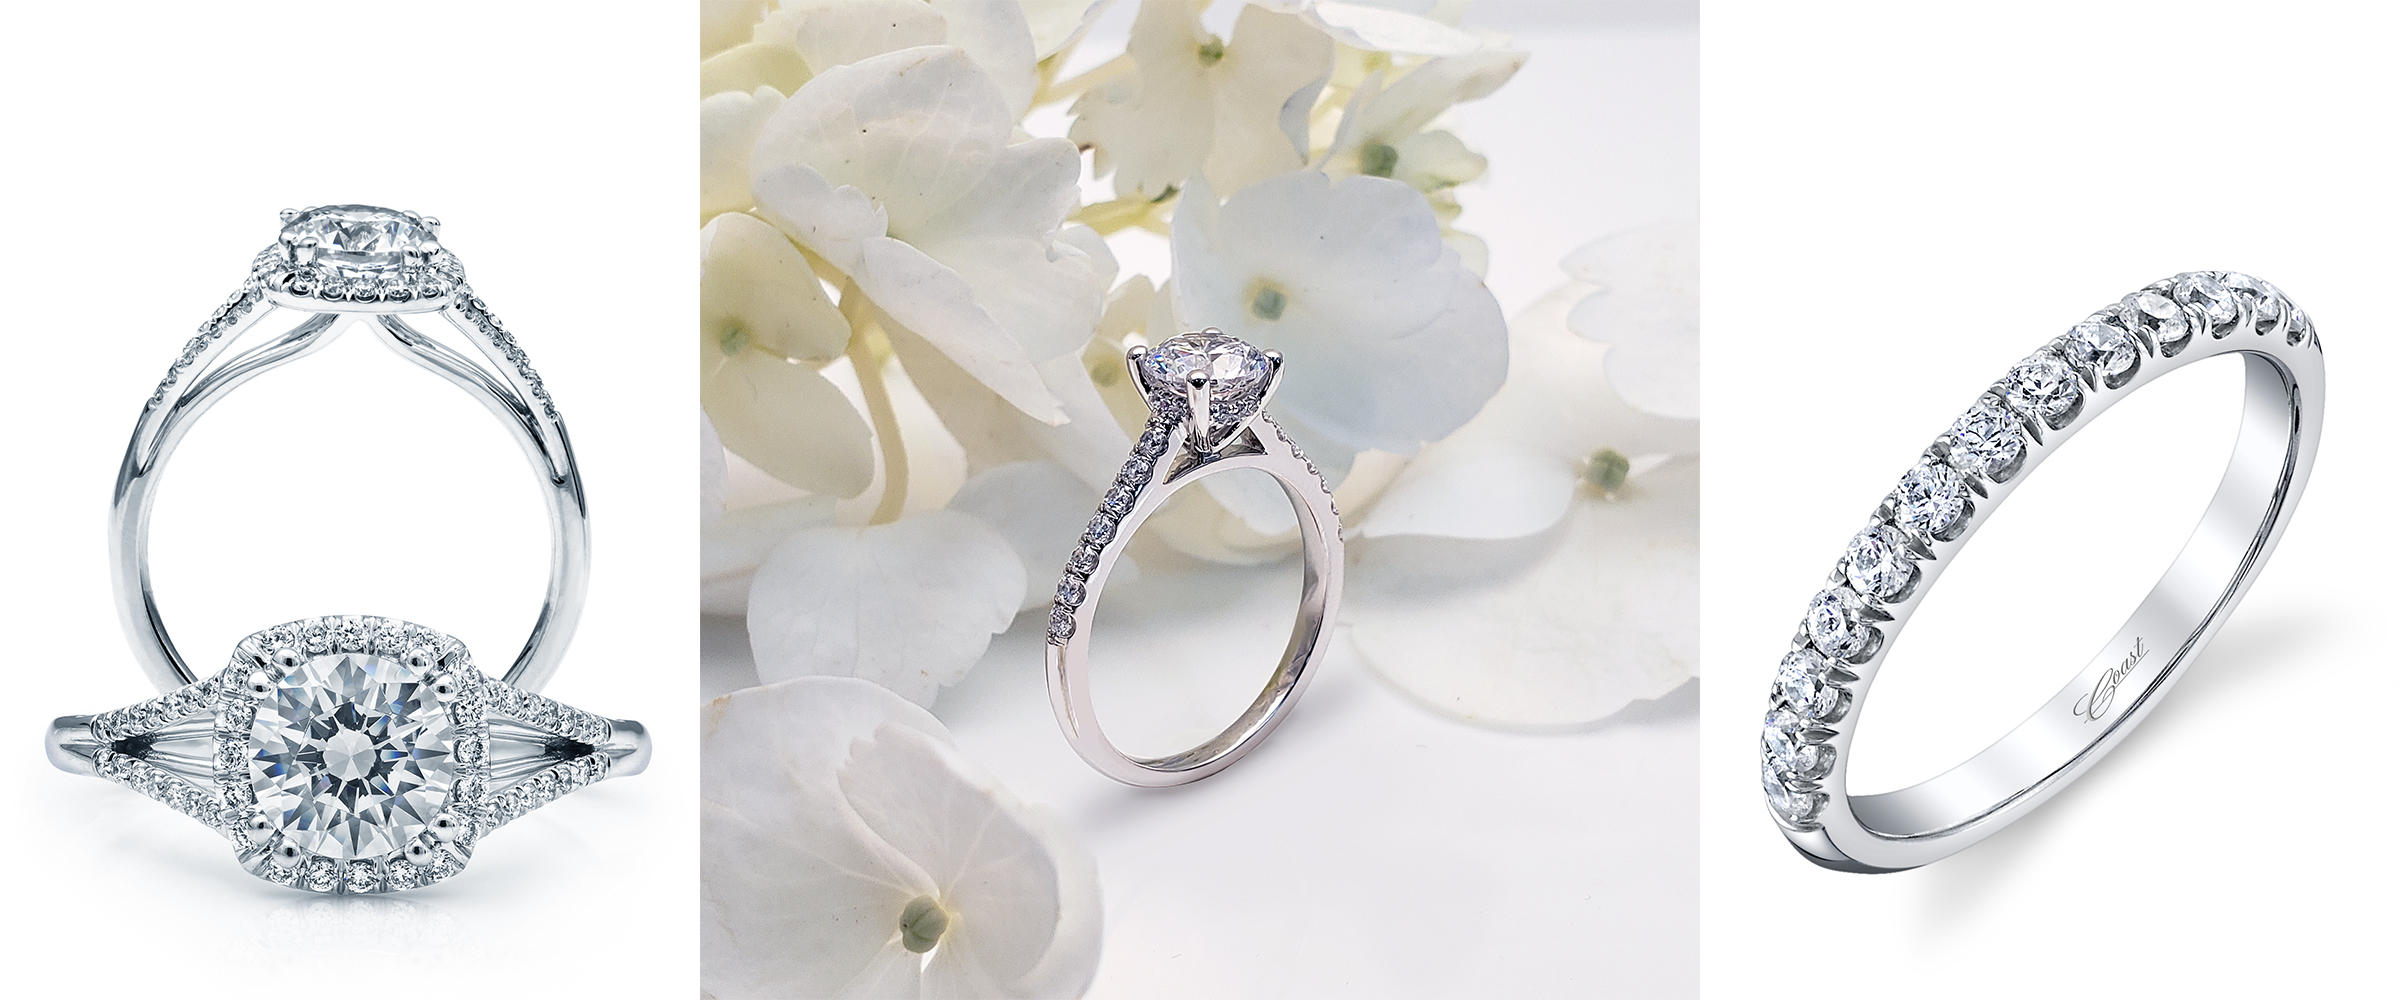 Love, Coast – Coast Diamond Engagement Rings and Fine Jewelry